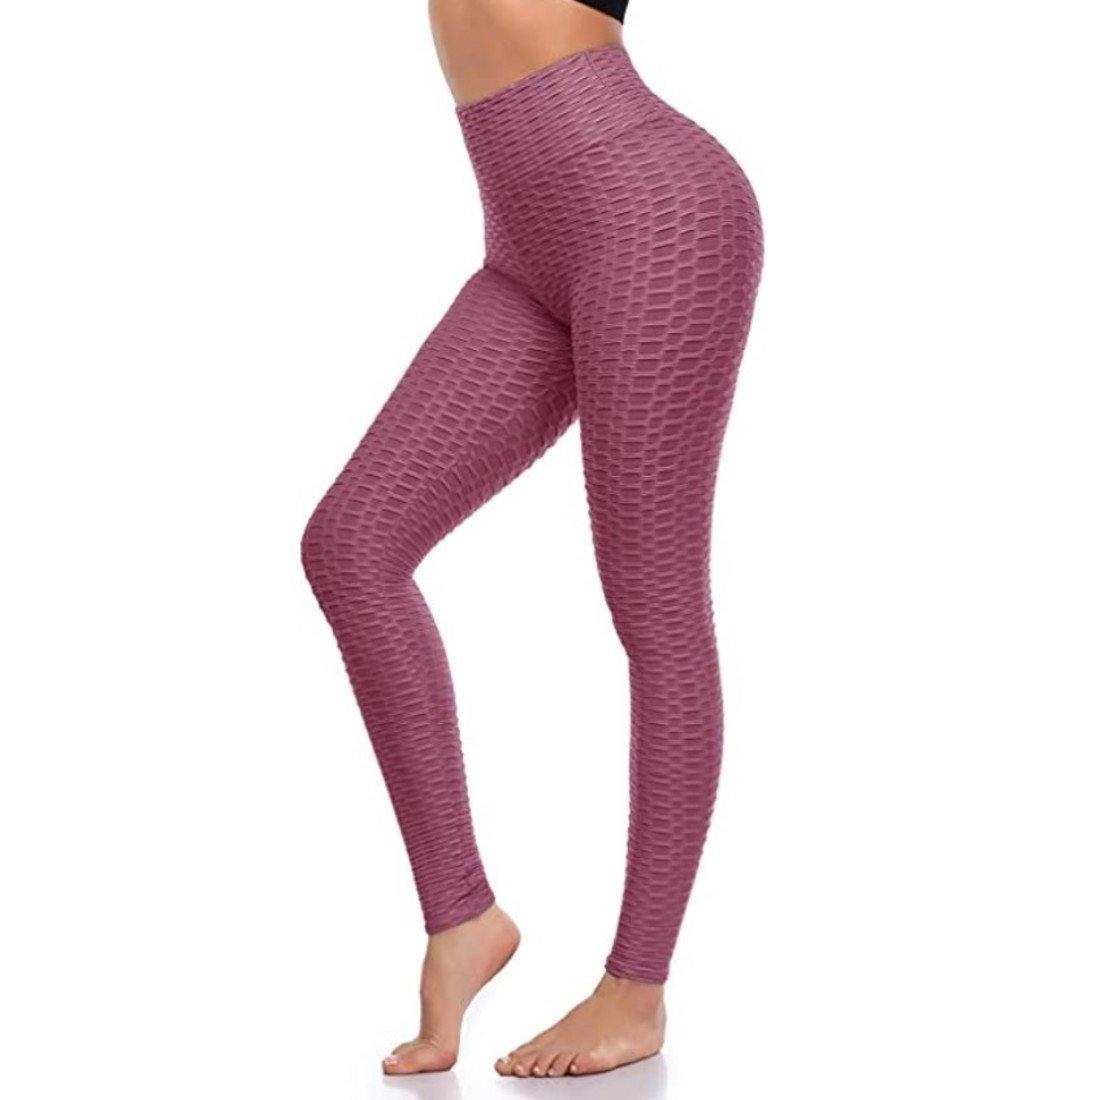 Tiktok Leggings for Women (Pink), Butt Lifting High Waist Yoga